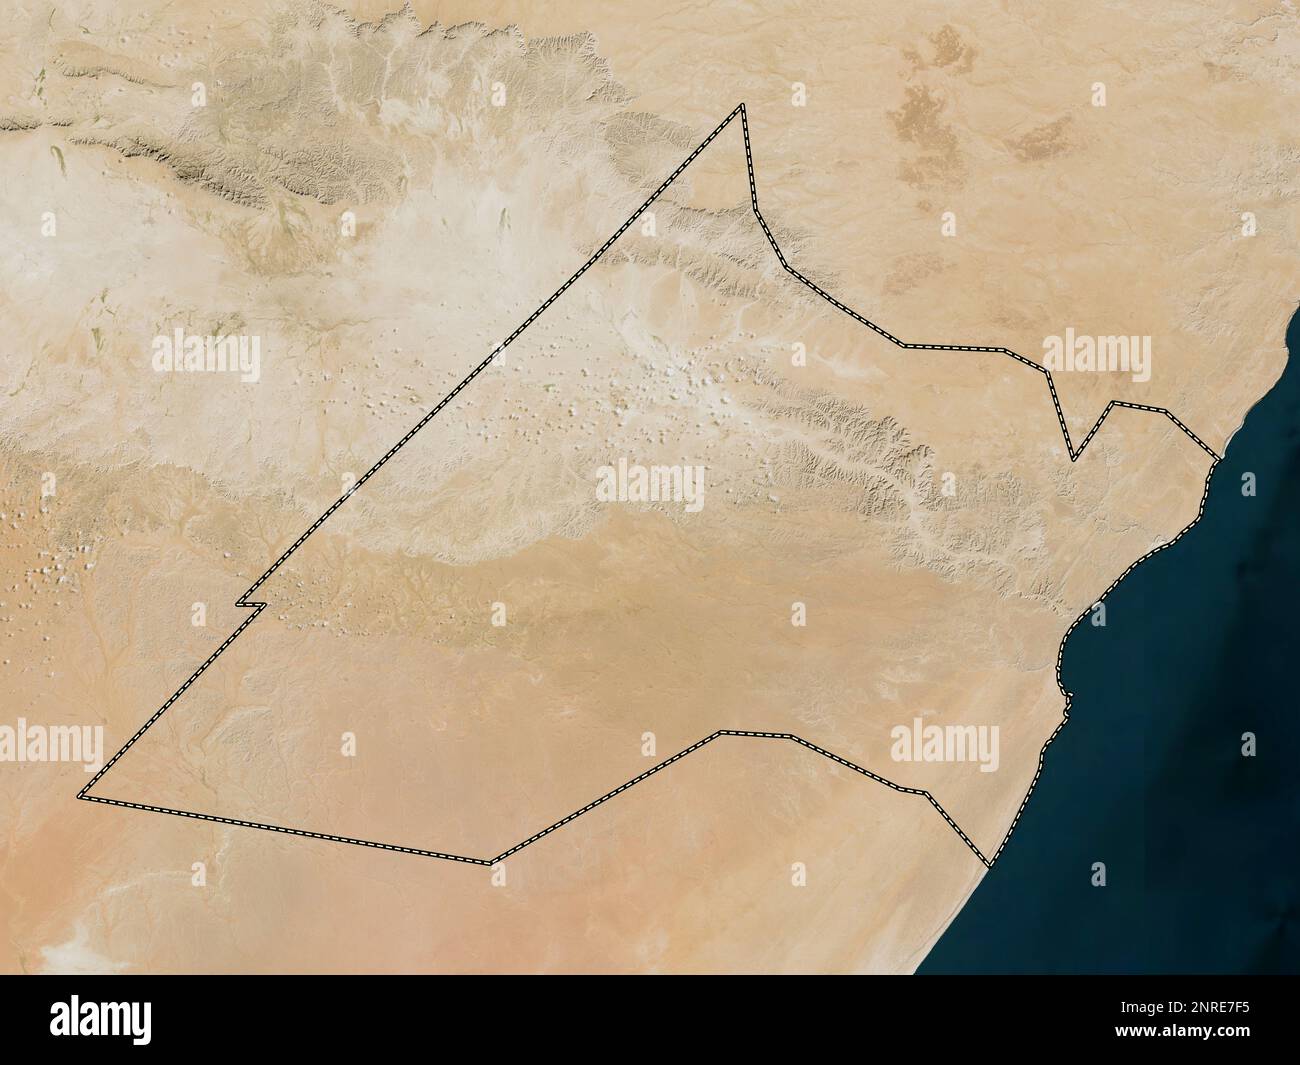 Nugaal, region of Somalia Mainland. Low resolution satellite map Stock Photo